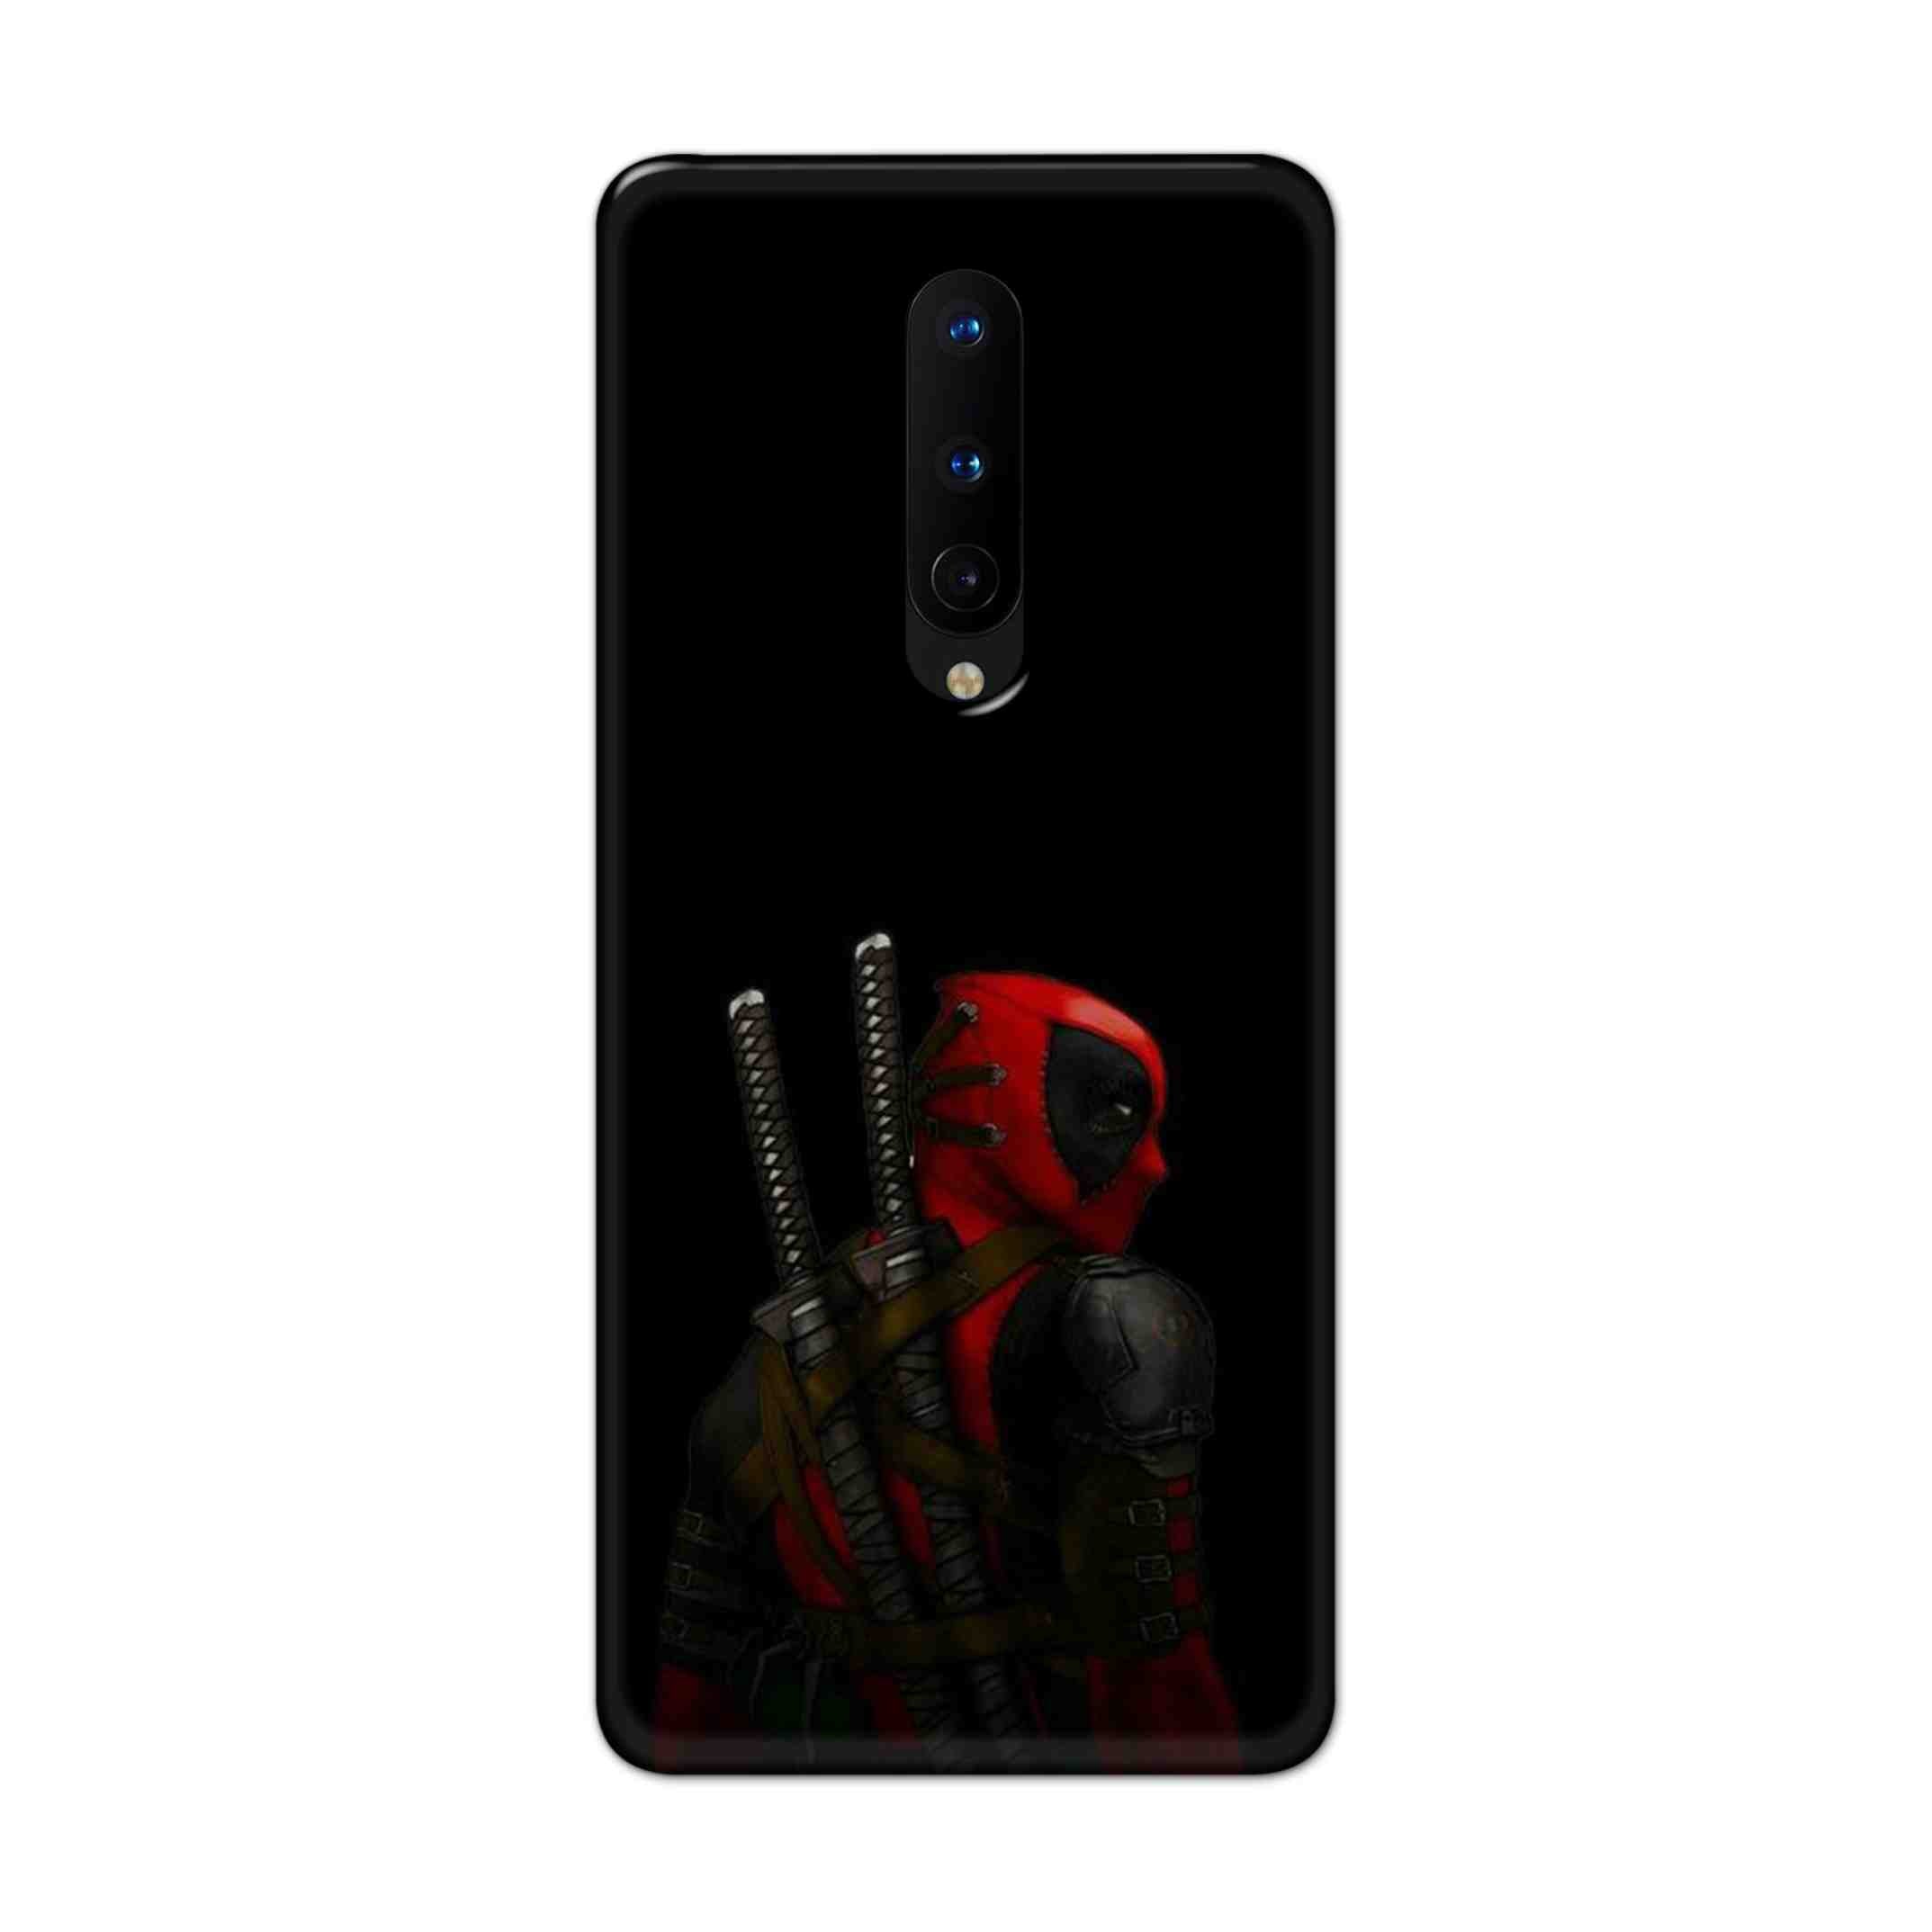 Buy Deadpool Hard Back Mobile Phone Case Cover For OnePlus 8 Online